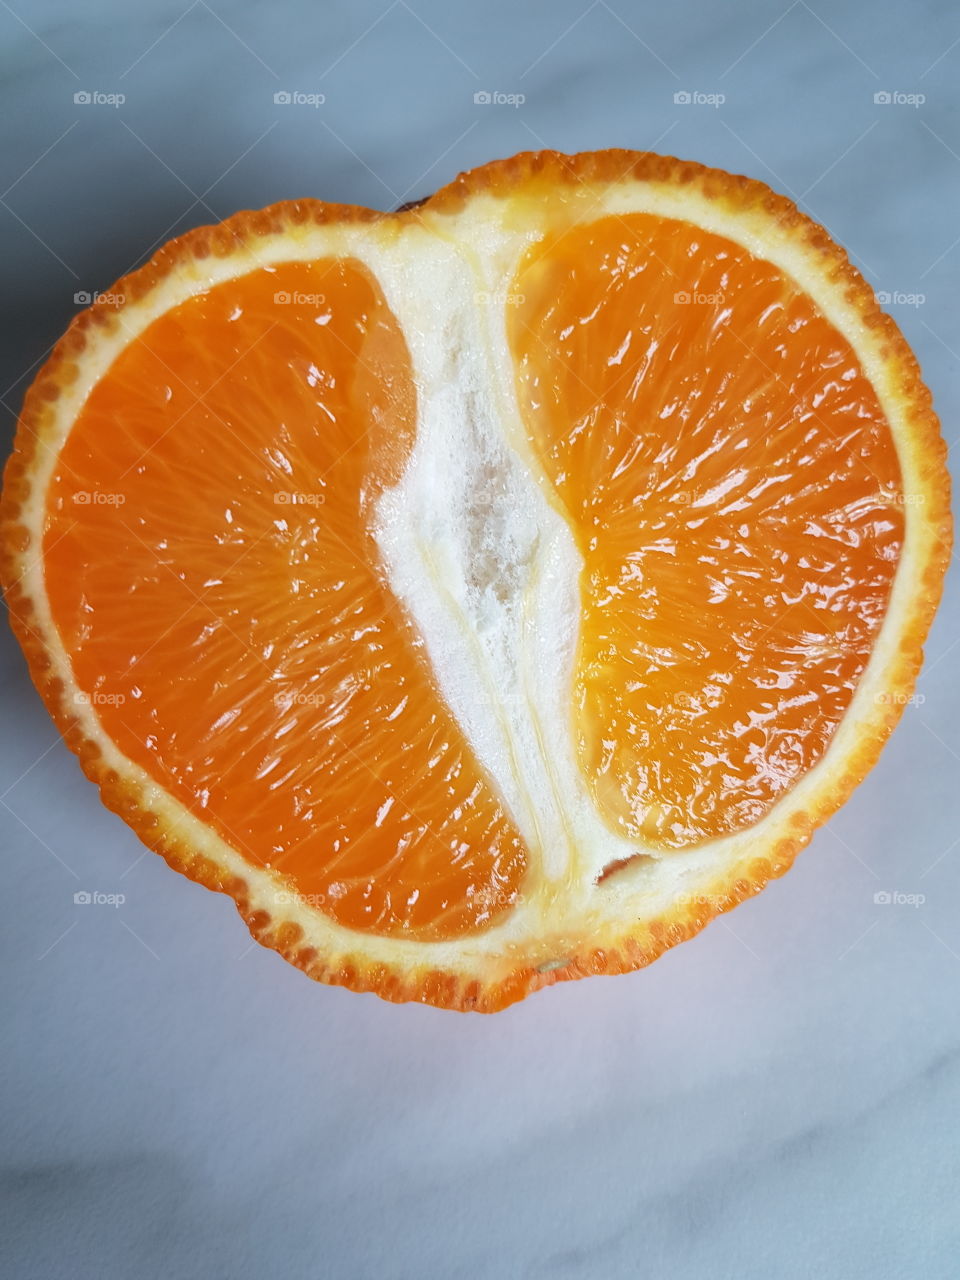 Orange and juicy mandarin